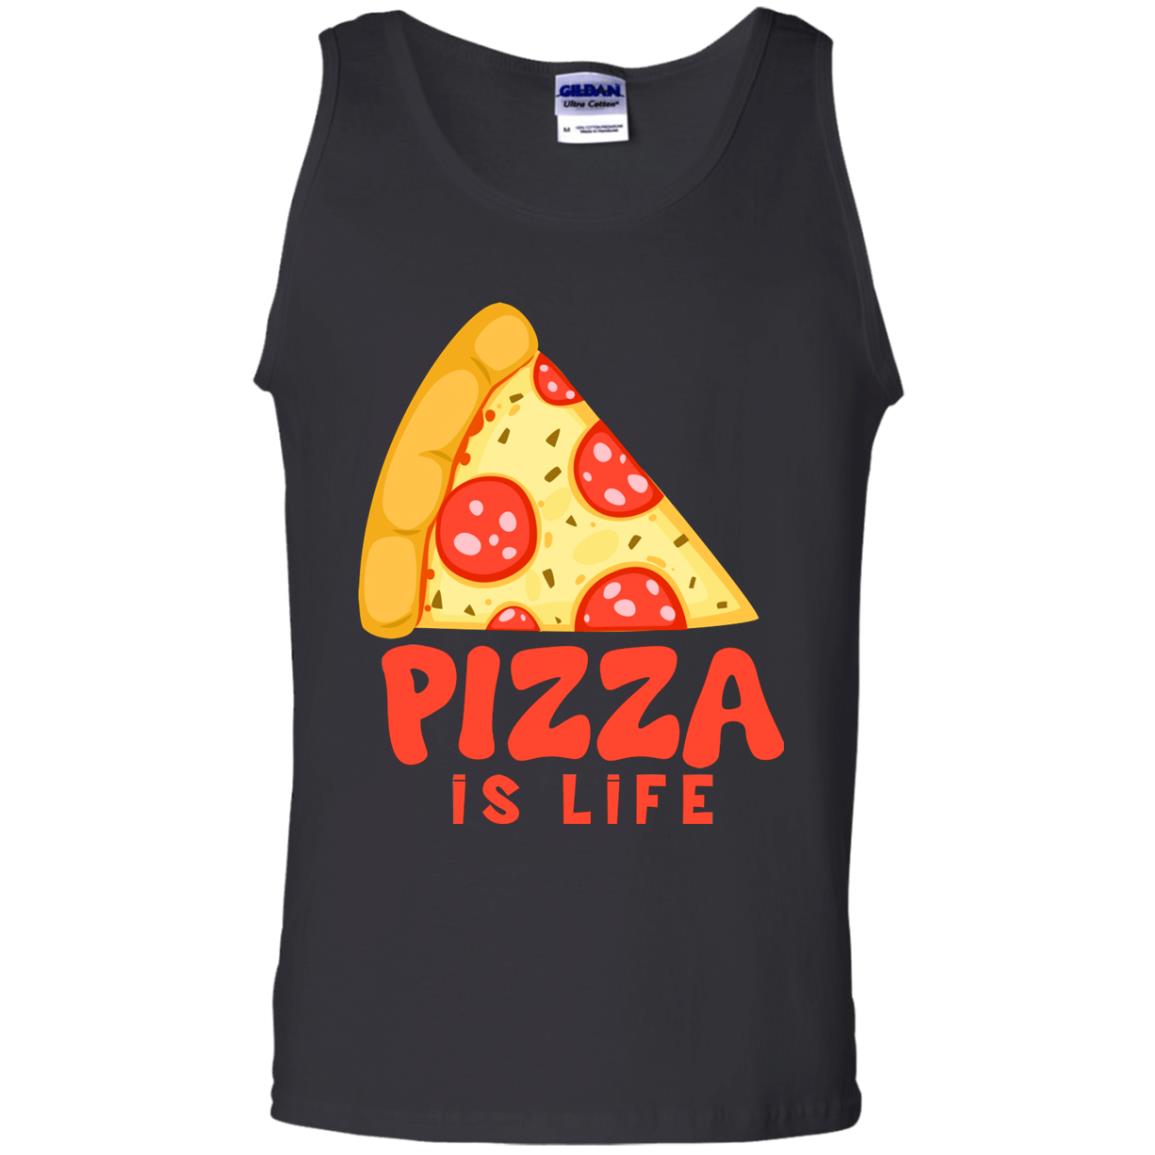 Pizza Is Life Shirt For Pizza LoversG220 Gildan 100% Cotton Tank Top